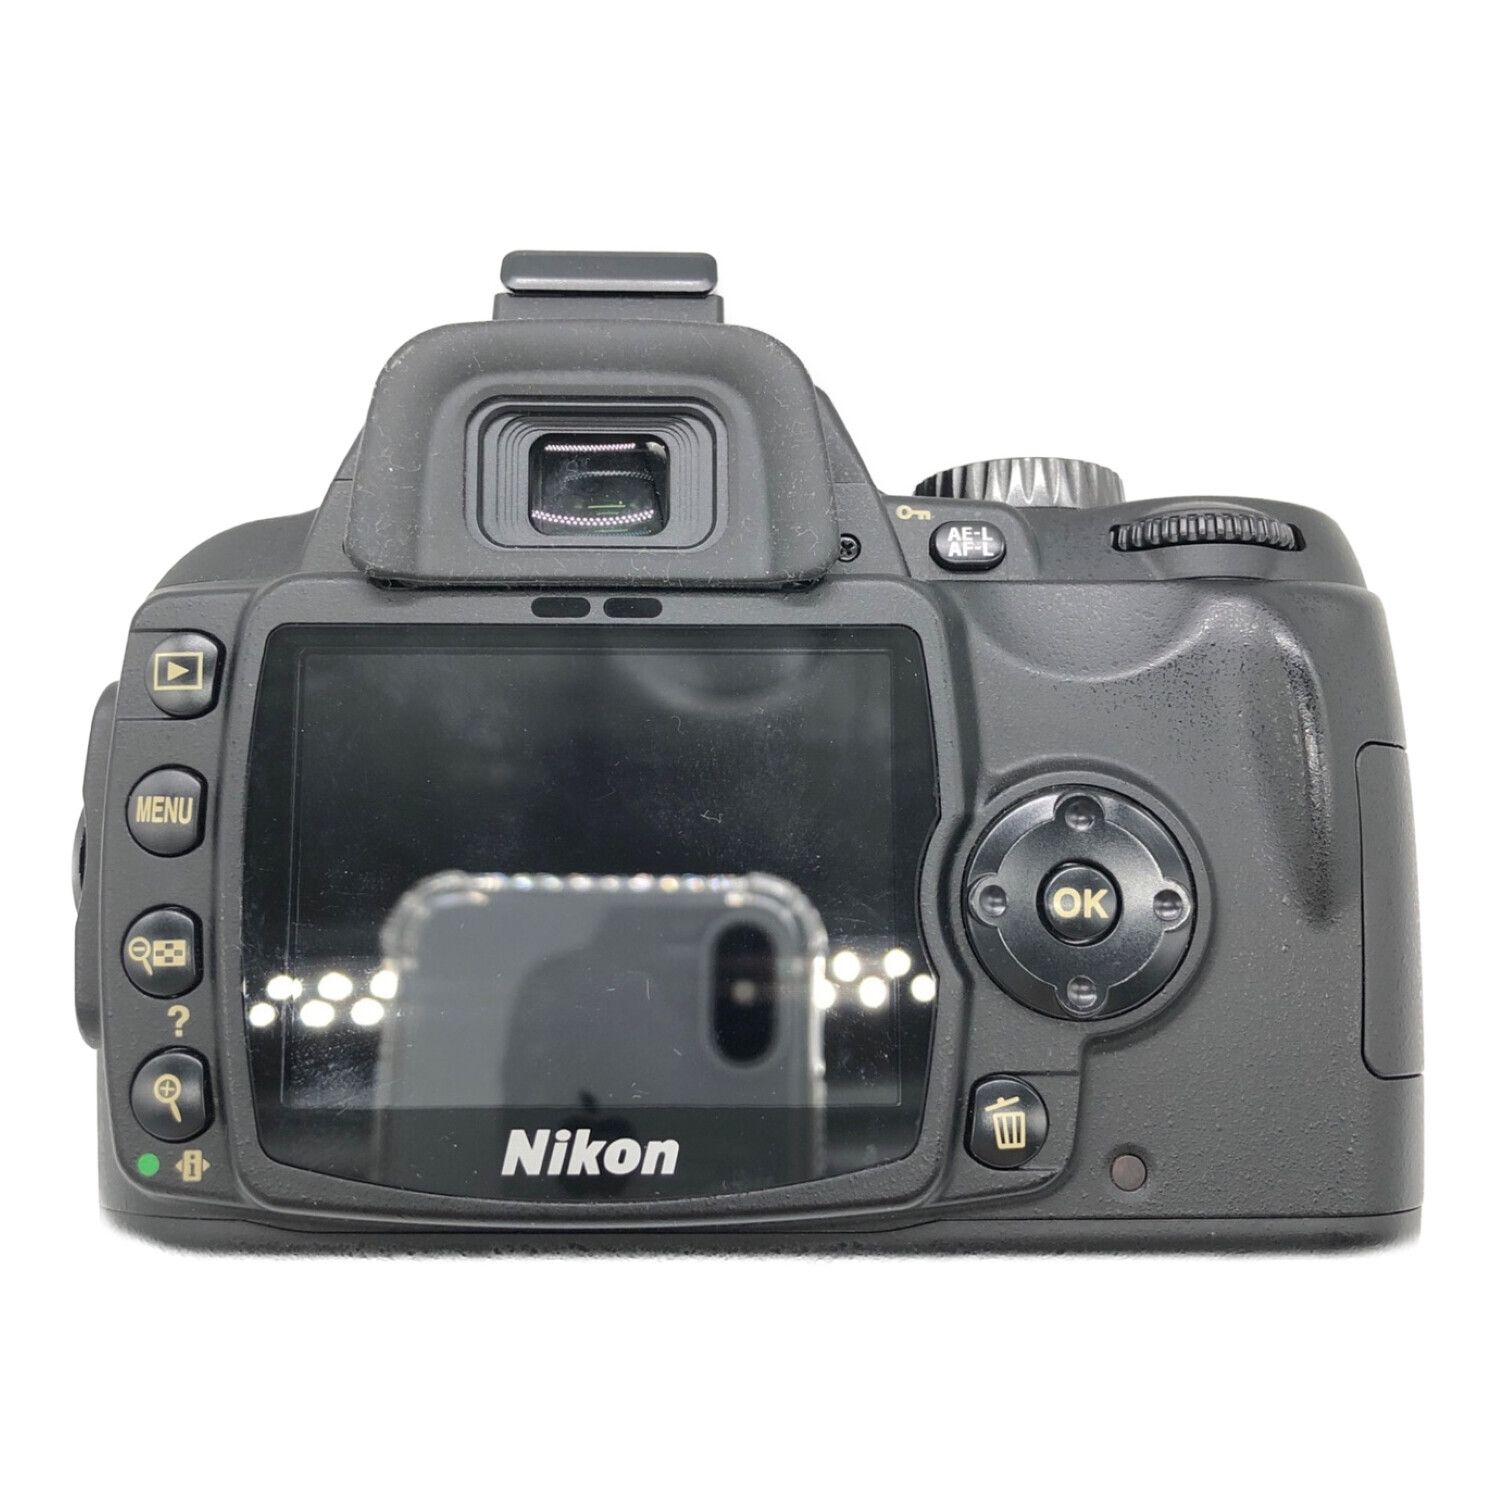 Nikon (ニコン) デジタル一眼レフカメラ D60 1075万画素 APS-C 専用